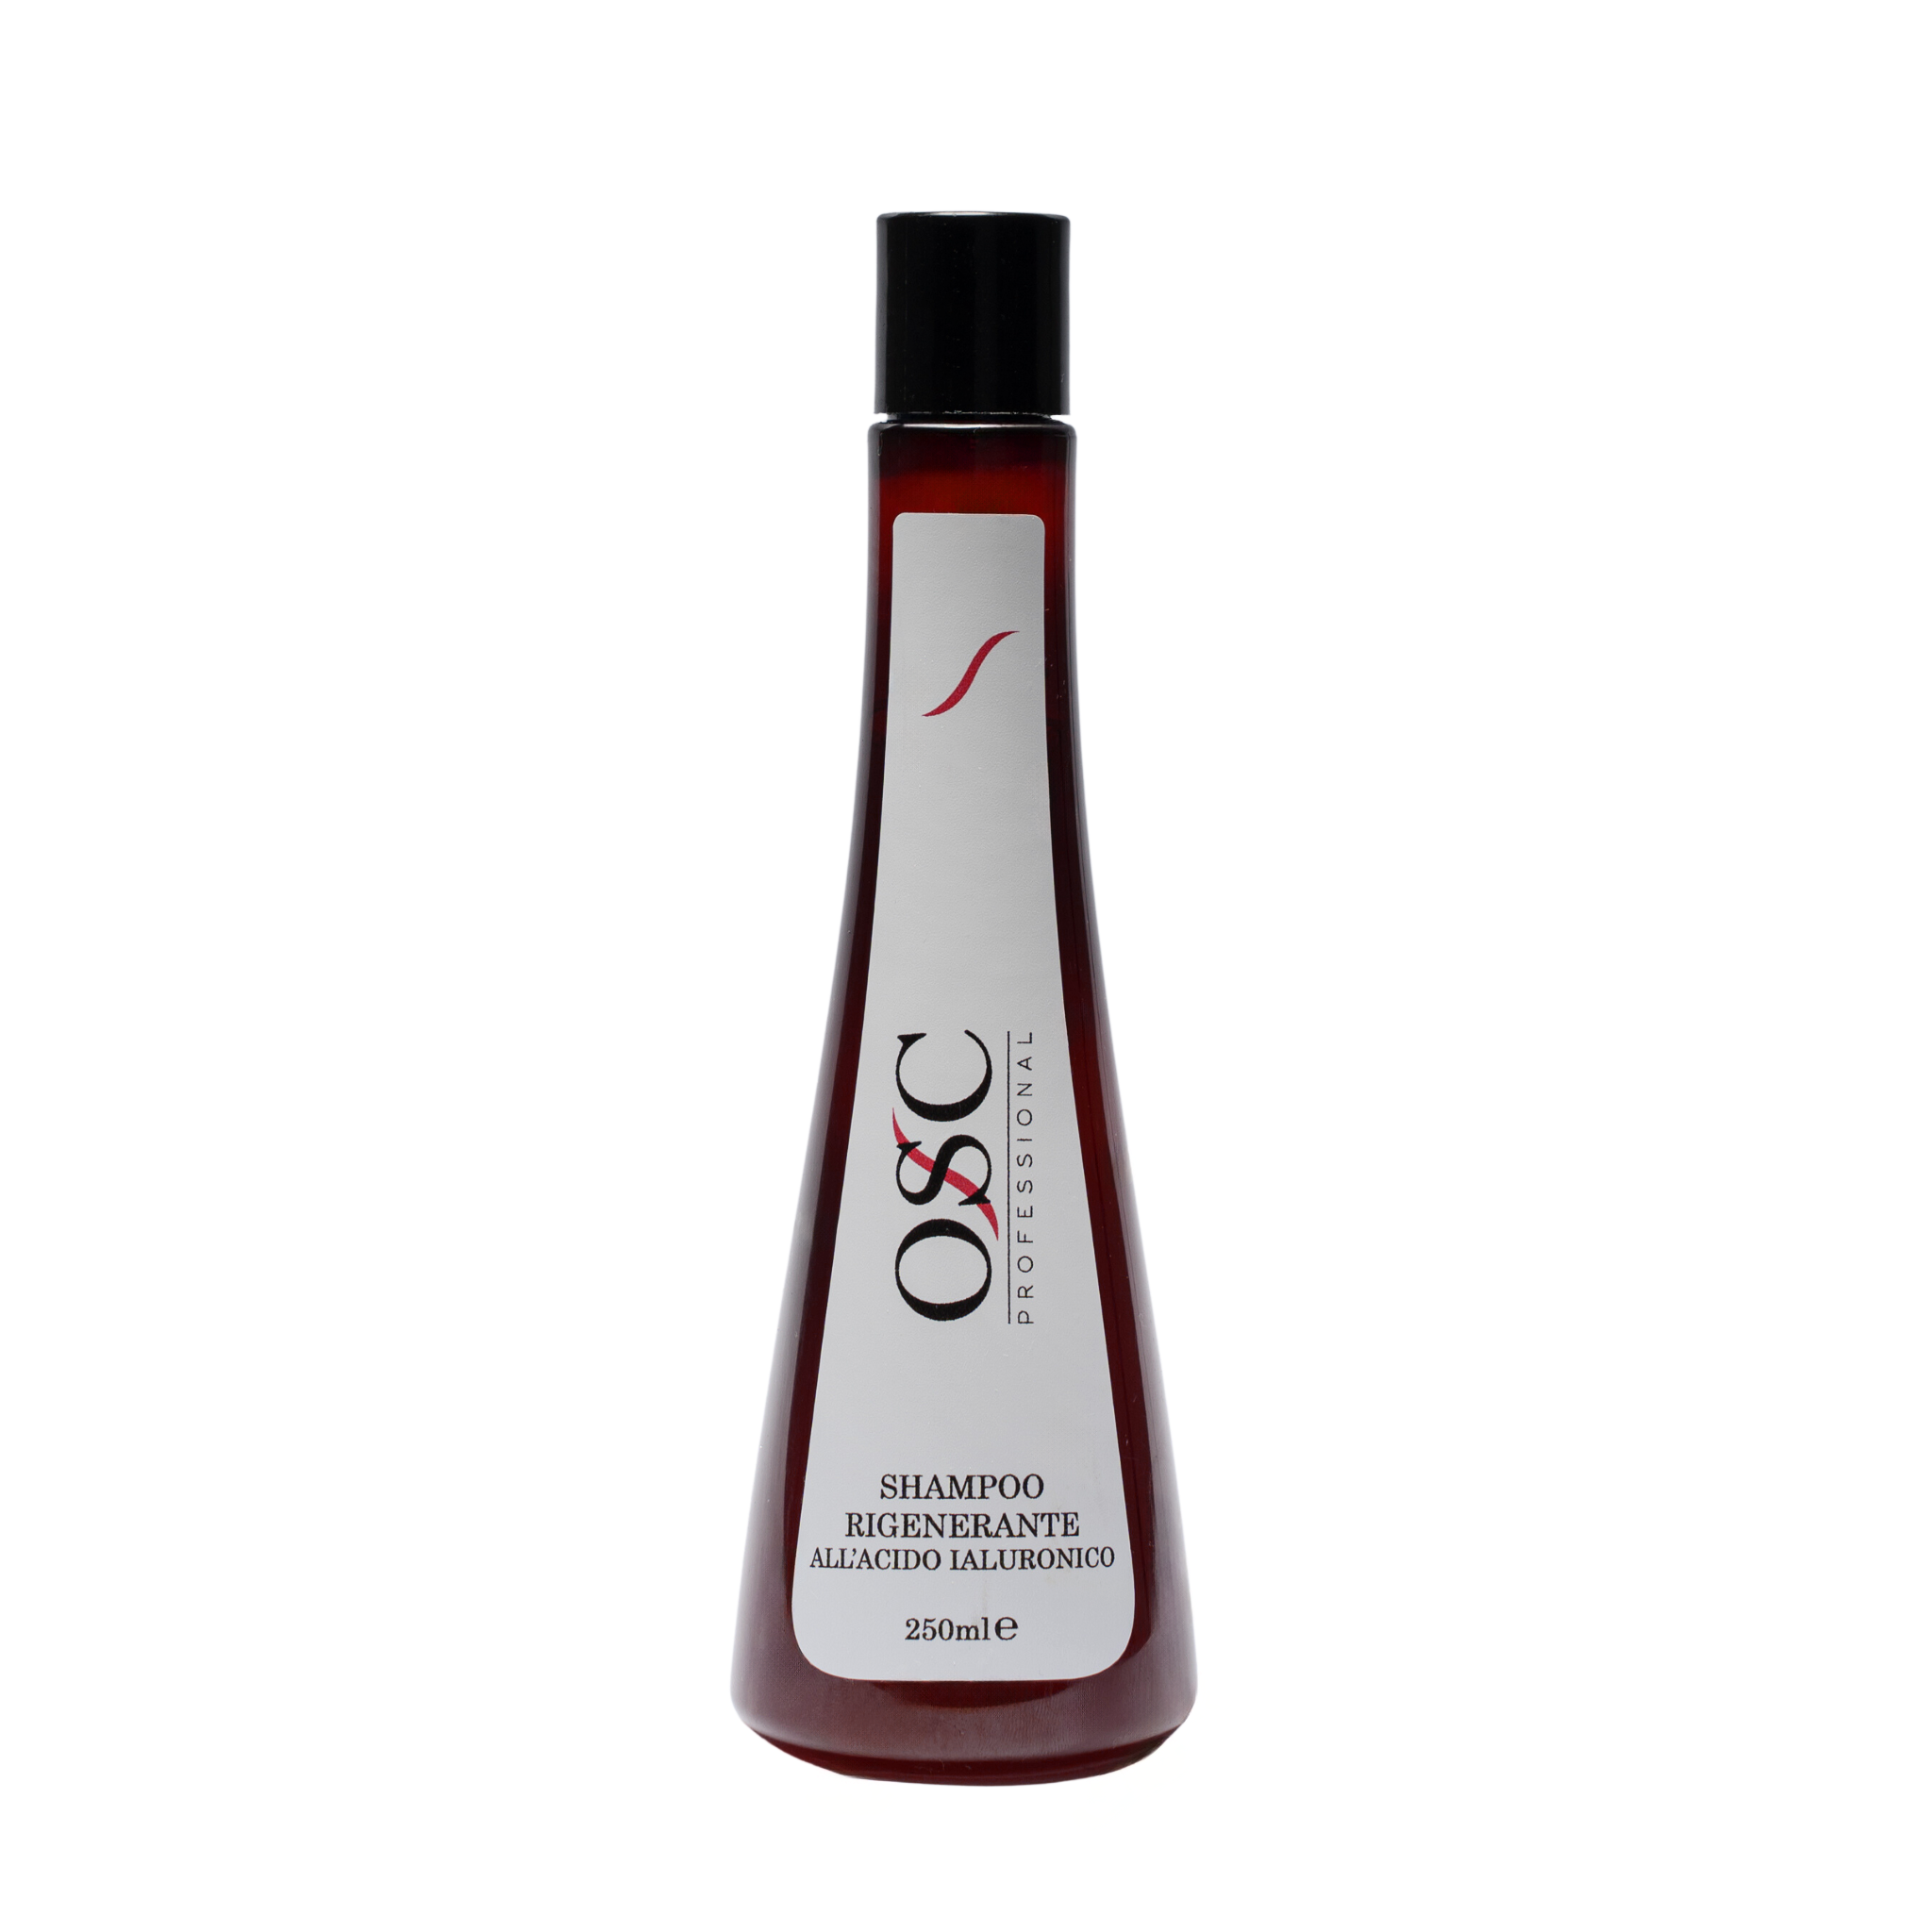 Shampoo OSC professional 250ml – Shampoo rigenerante all’acido ialuronico